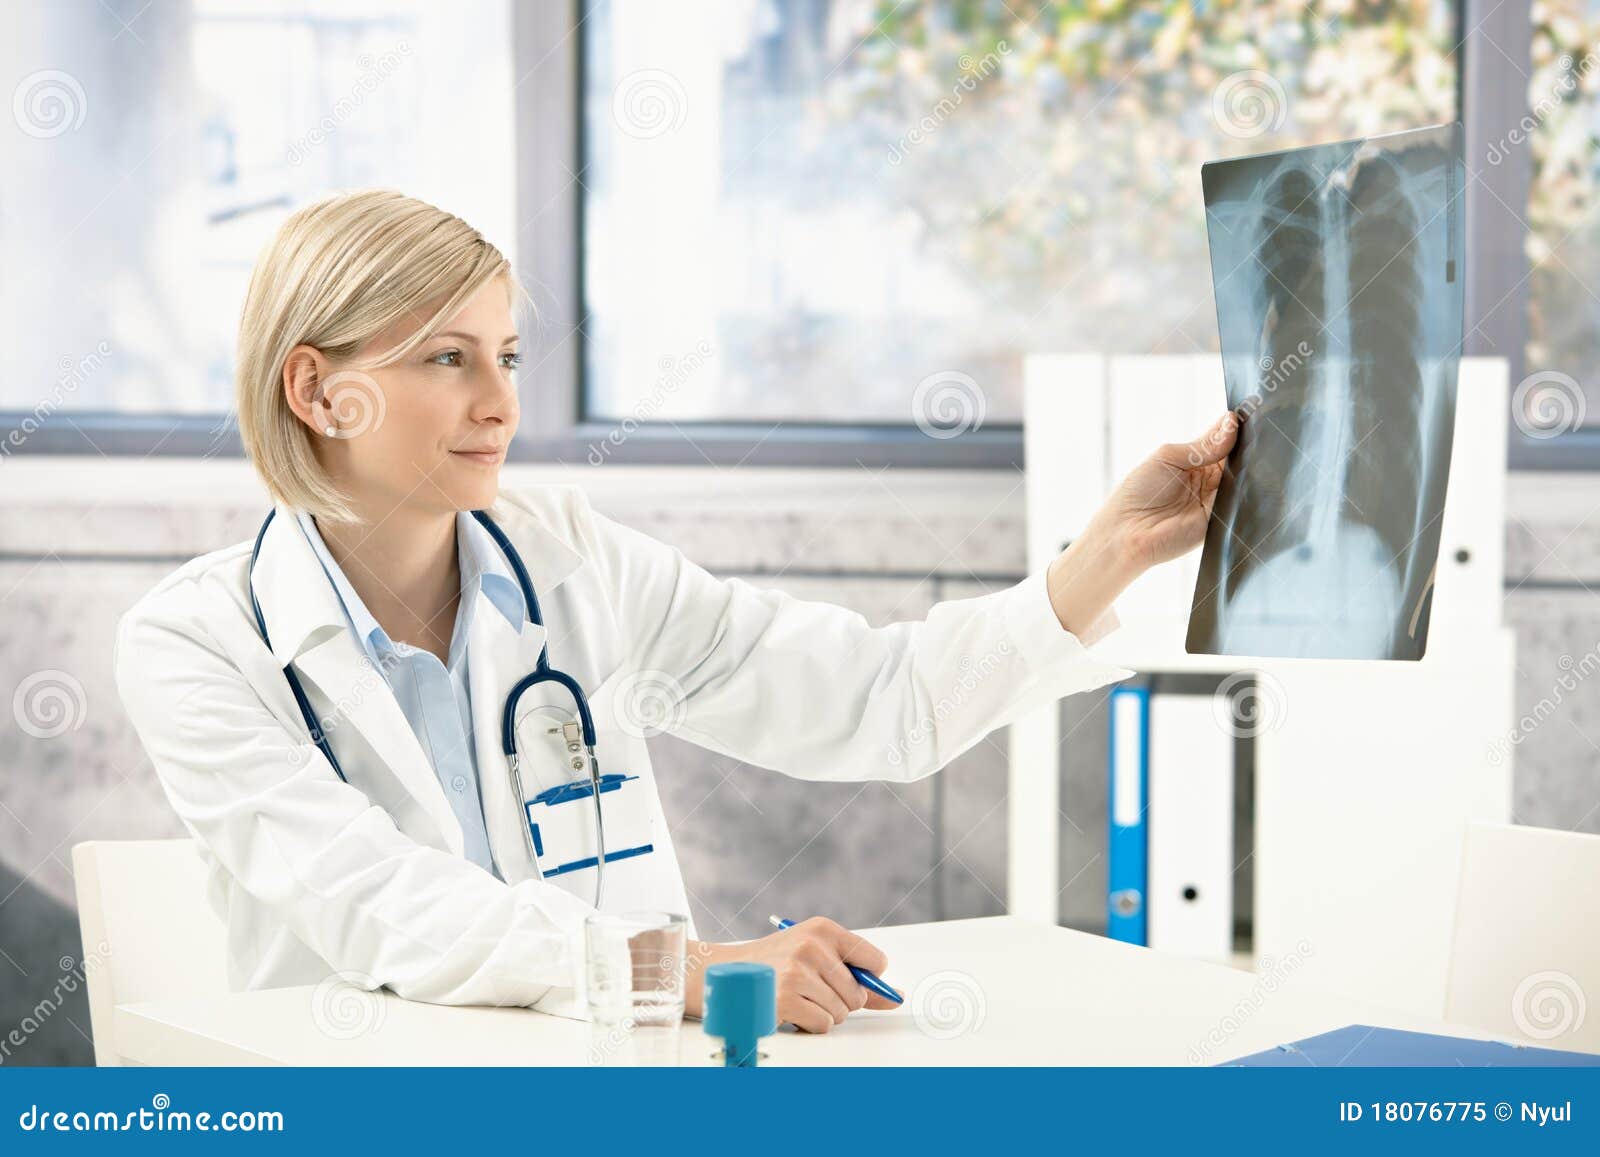 medical doctor analysing x-ray image